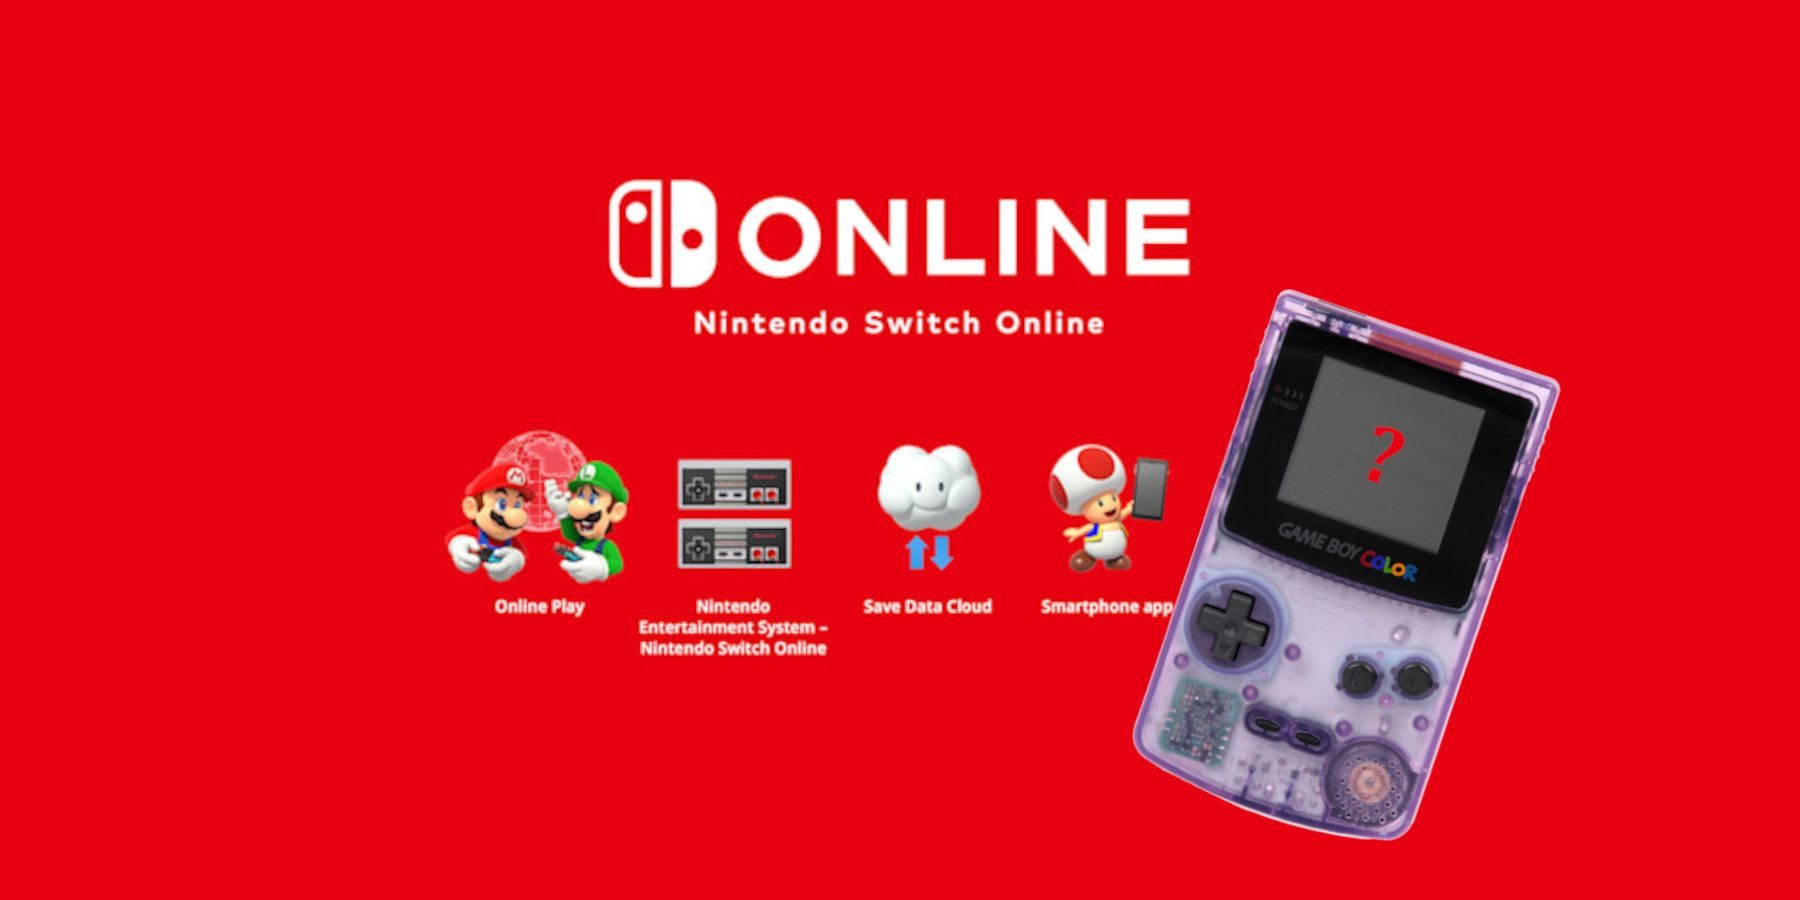 nintendo-switch-online-game-boy-juegos-1-3934920